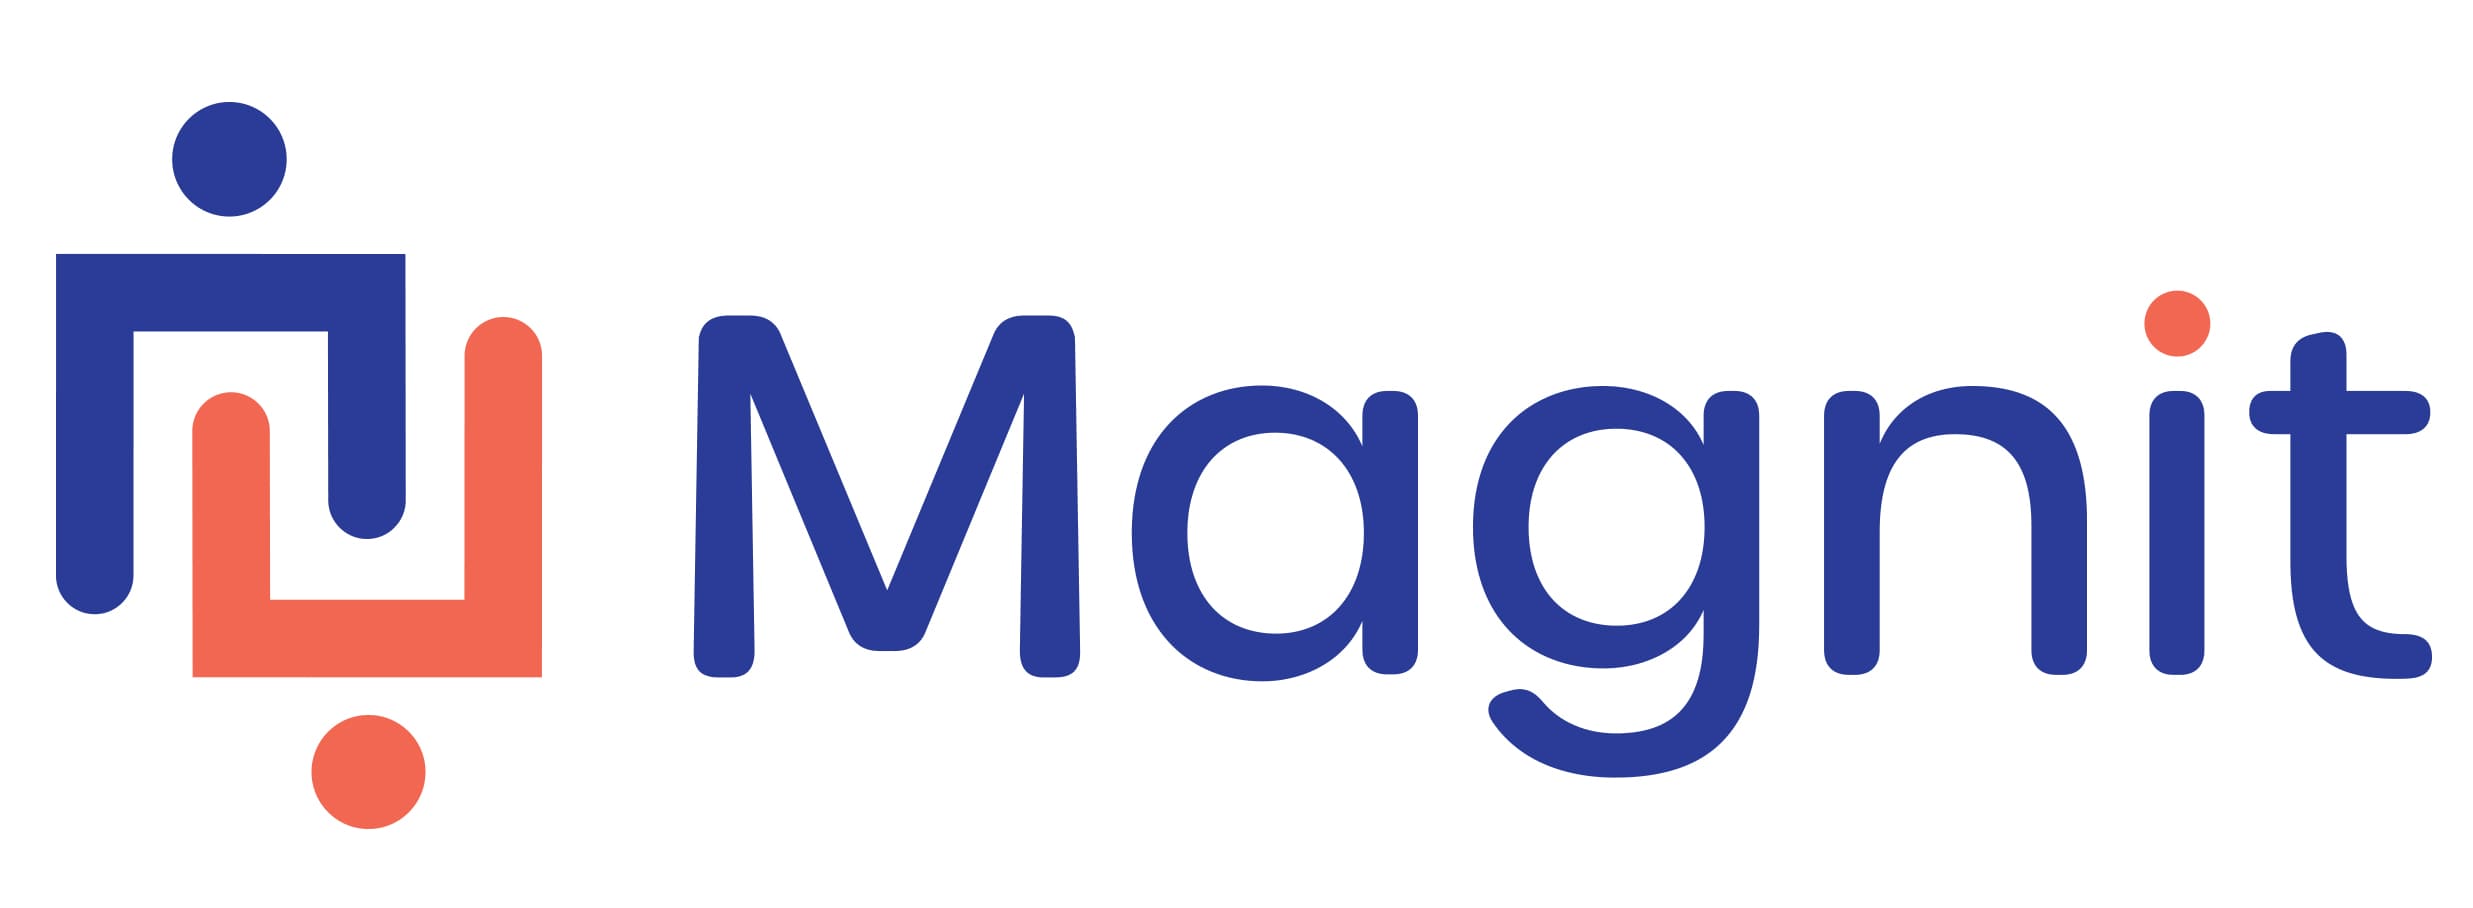 Magnit logo